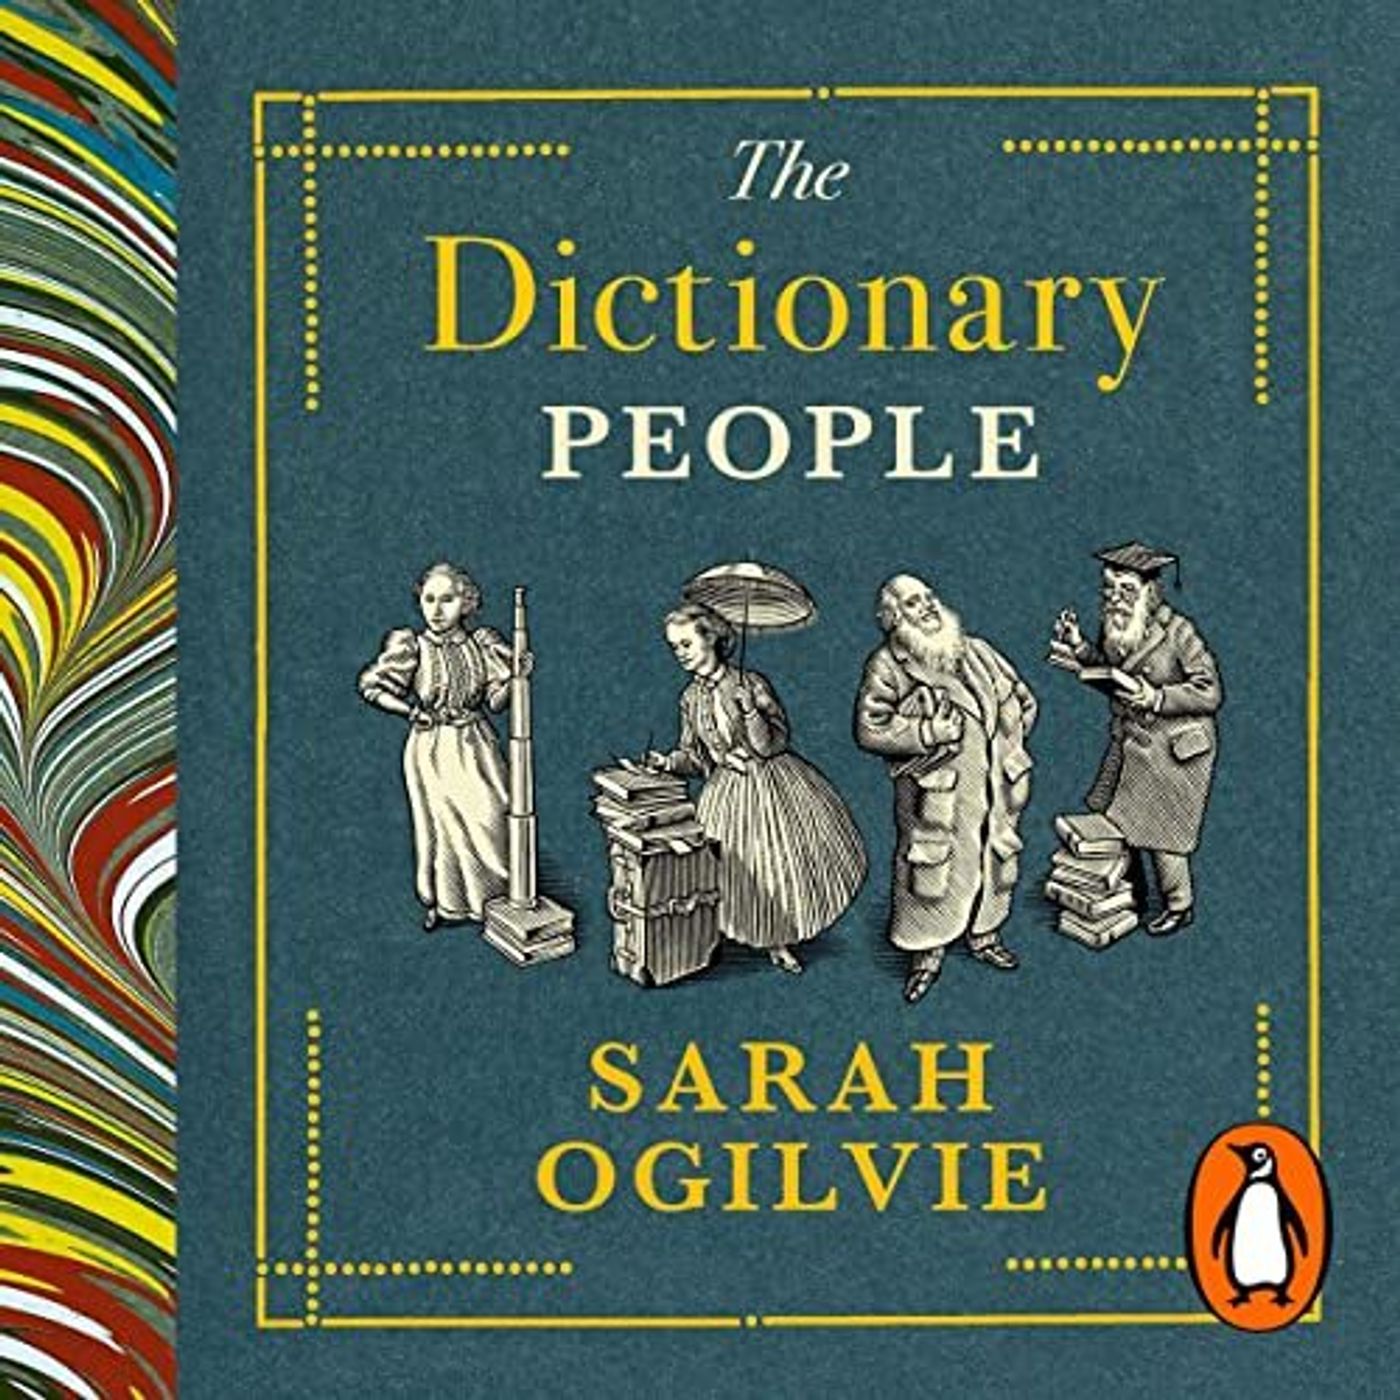 Sarah Ogilvie: The Dictionary People